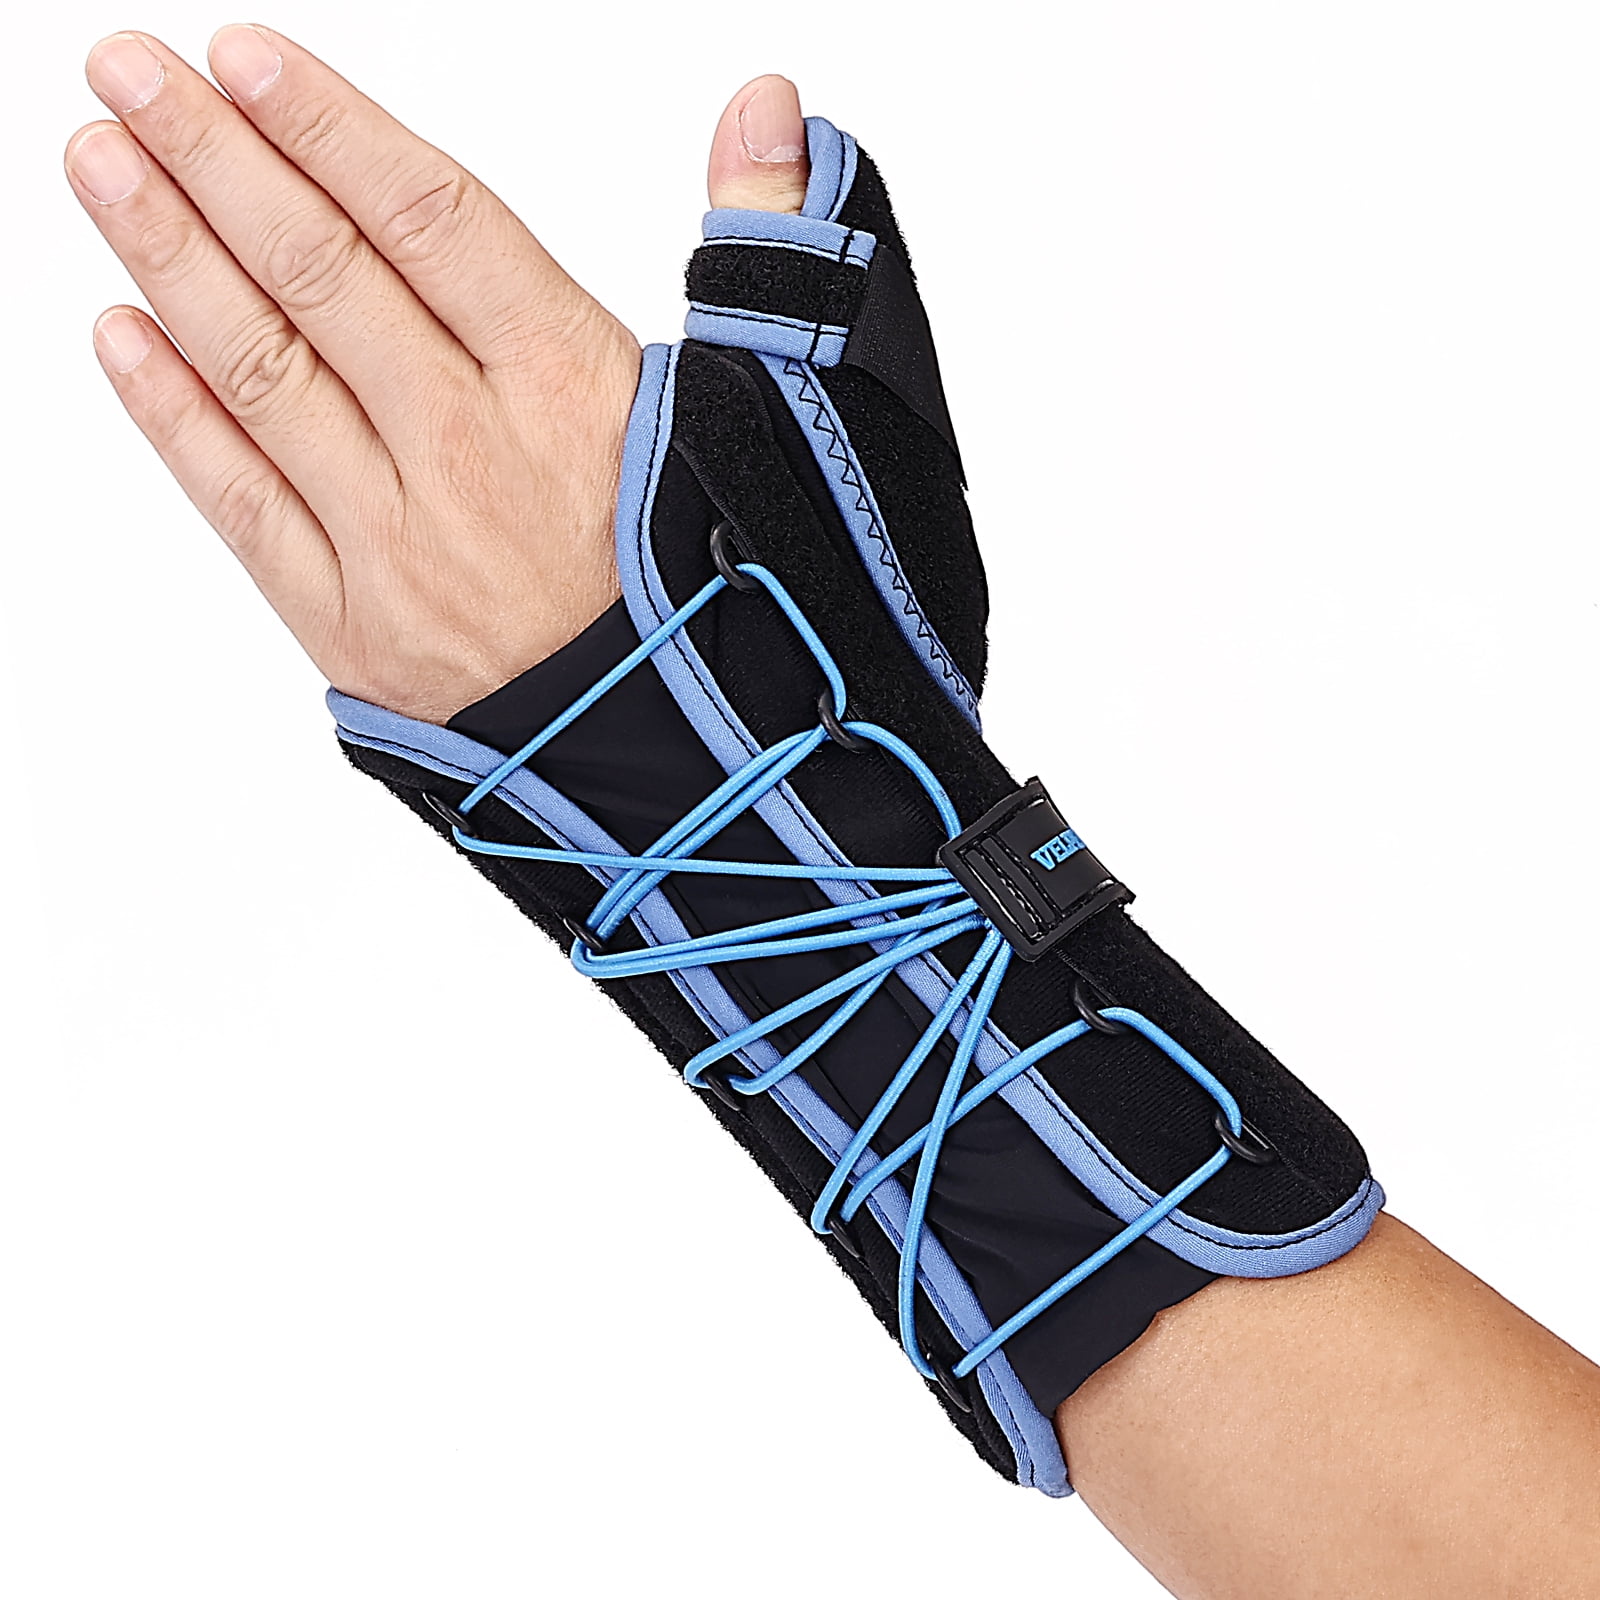 Thumb Spica Splint & Wrist Brace Large / Left